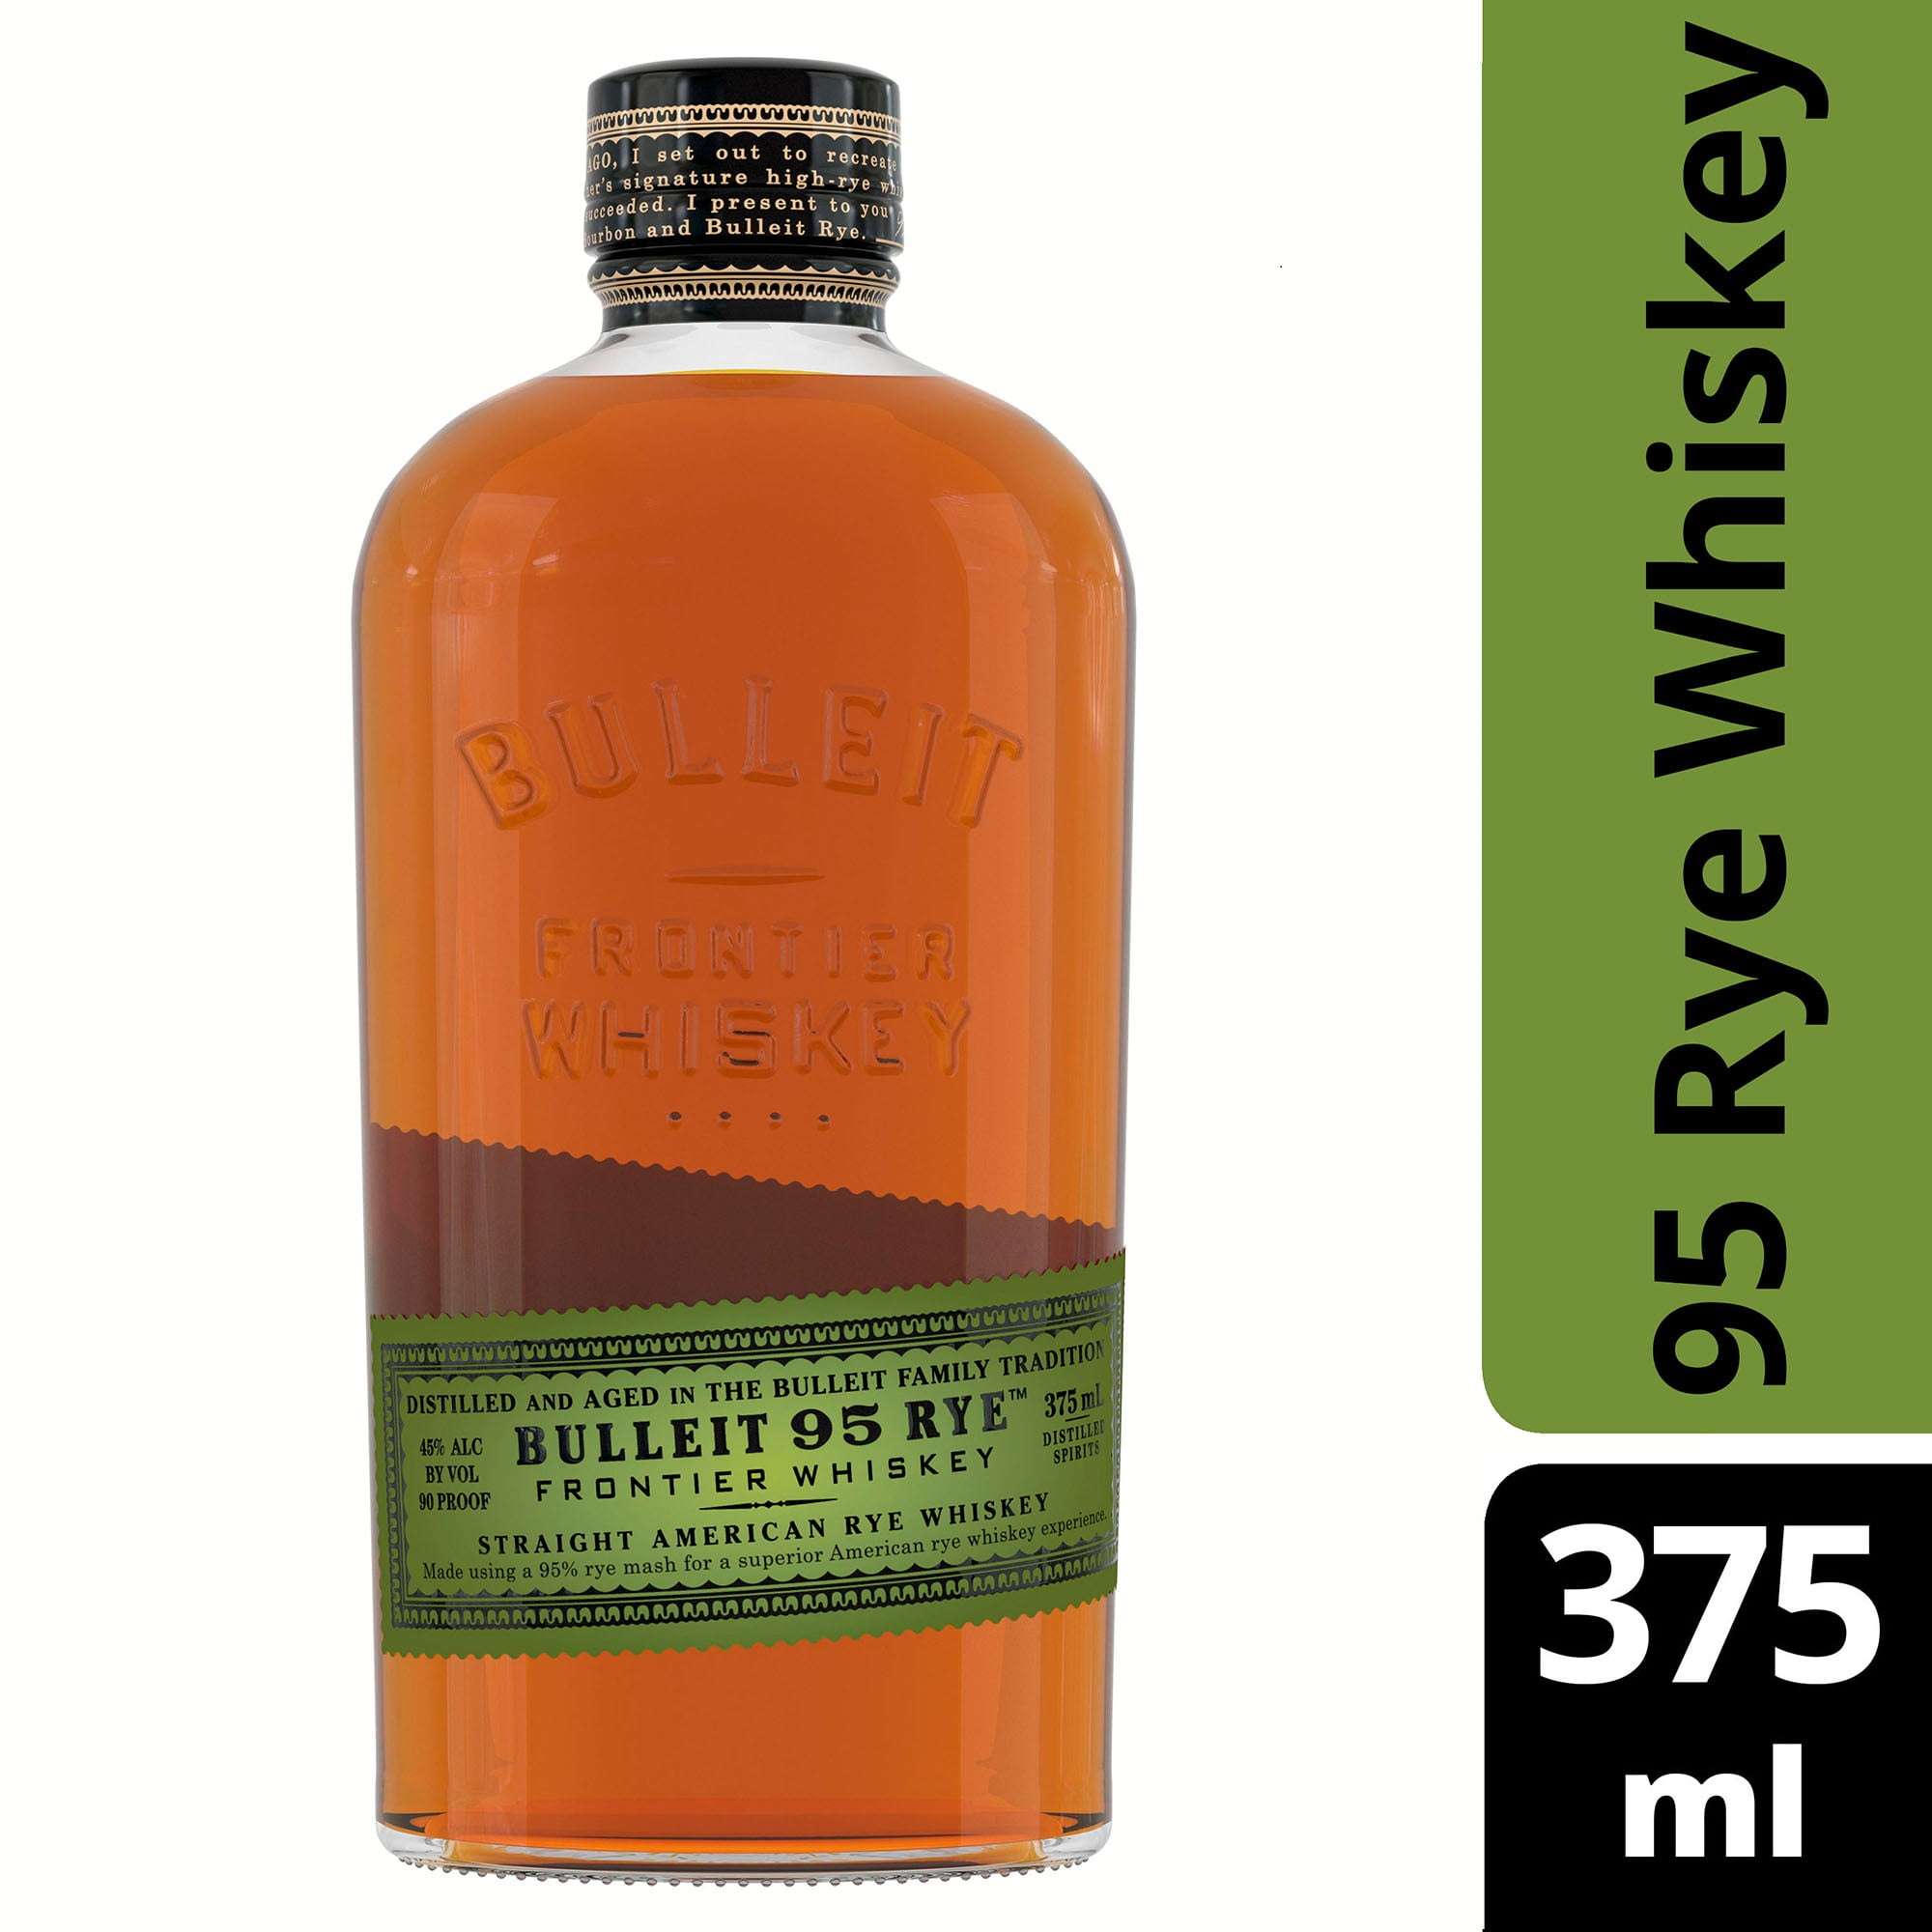 Bulleit 95 Rye Whiskey, 375 ml, 45% ABV